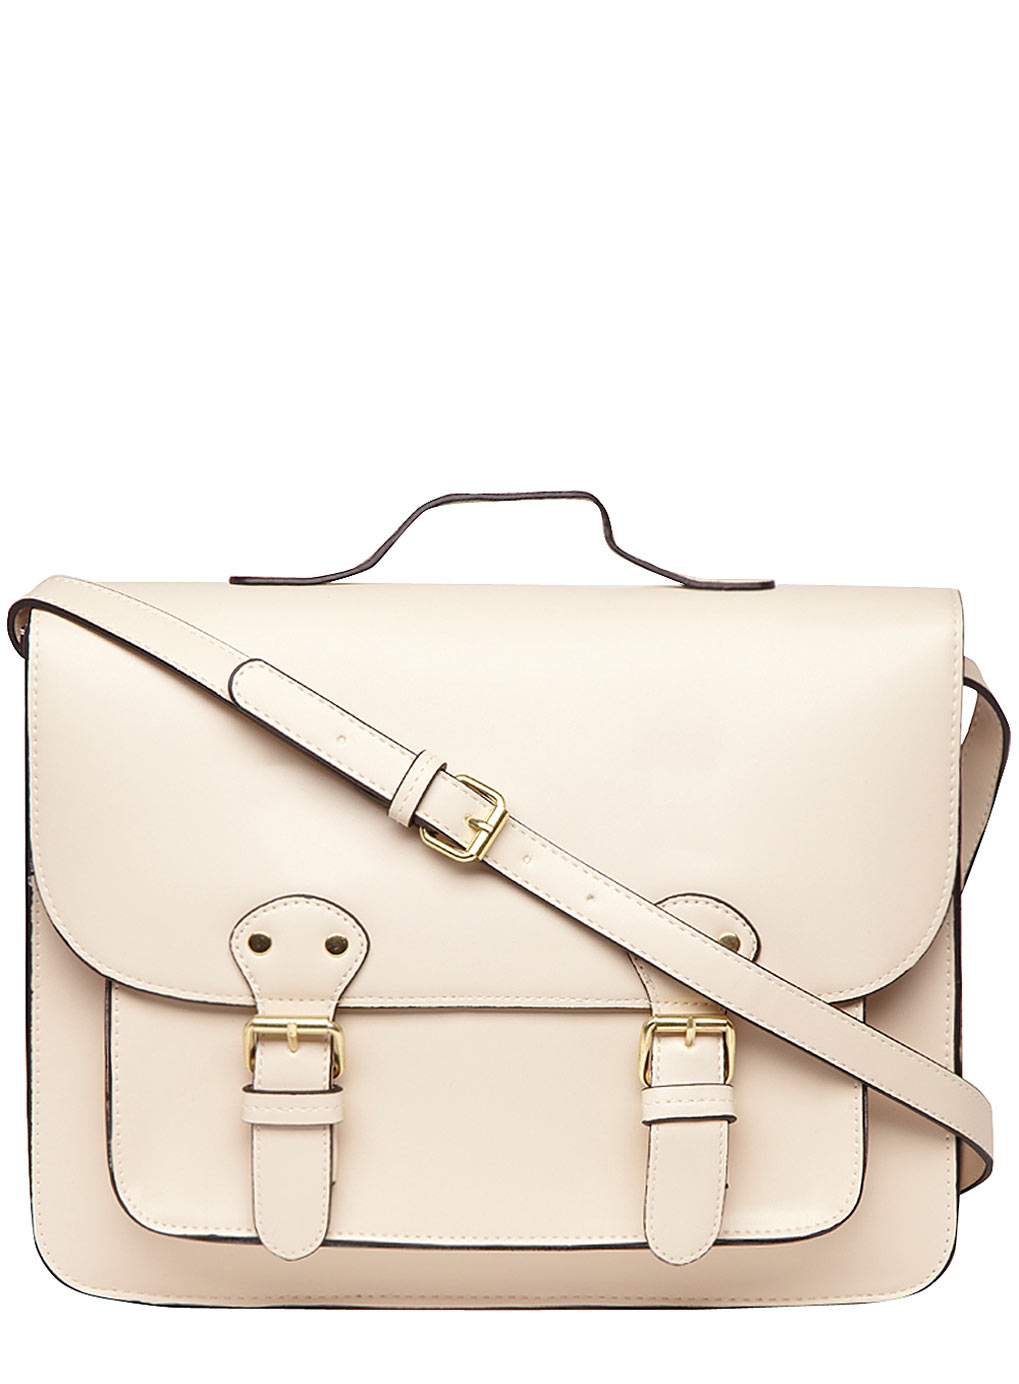 Dorothy Perkins Cream structured satchel 18336955